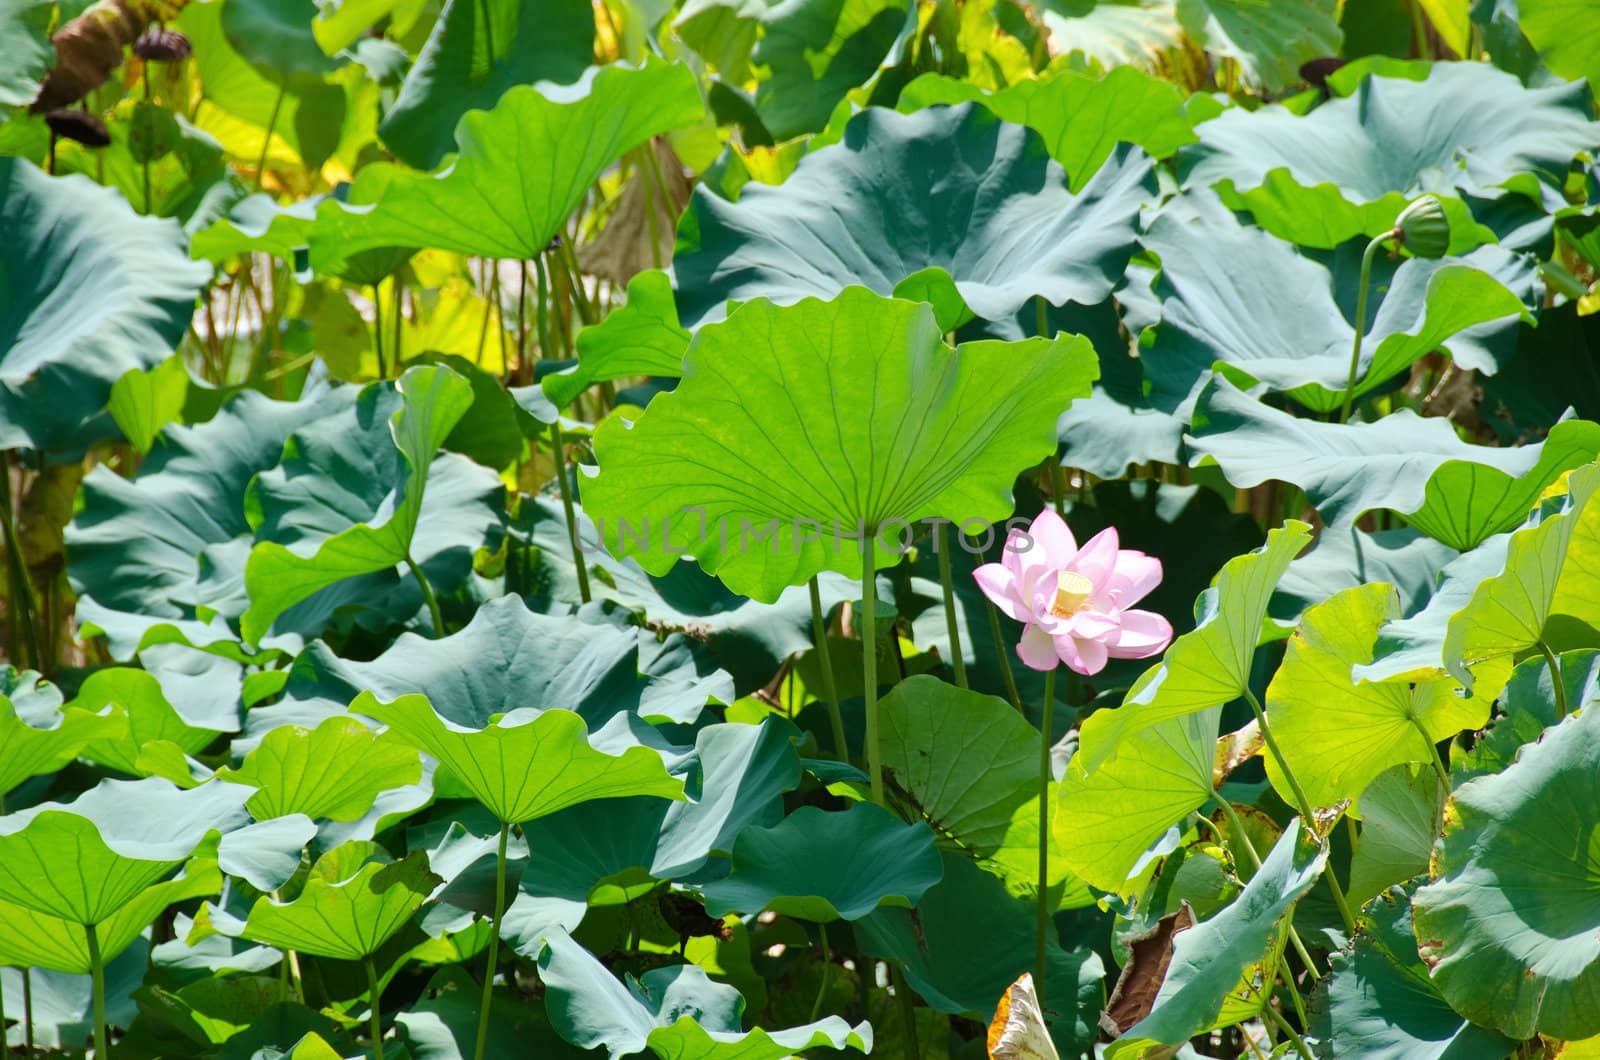 Lotus flower amongst lotus leaves in a japanese pond, Nelumbo nucifera